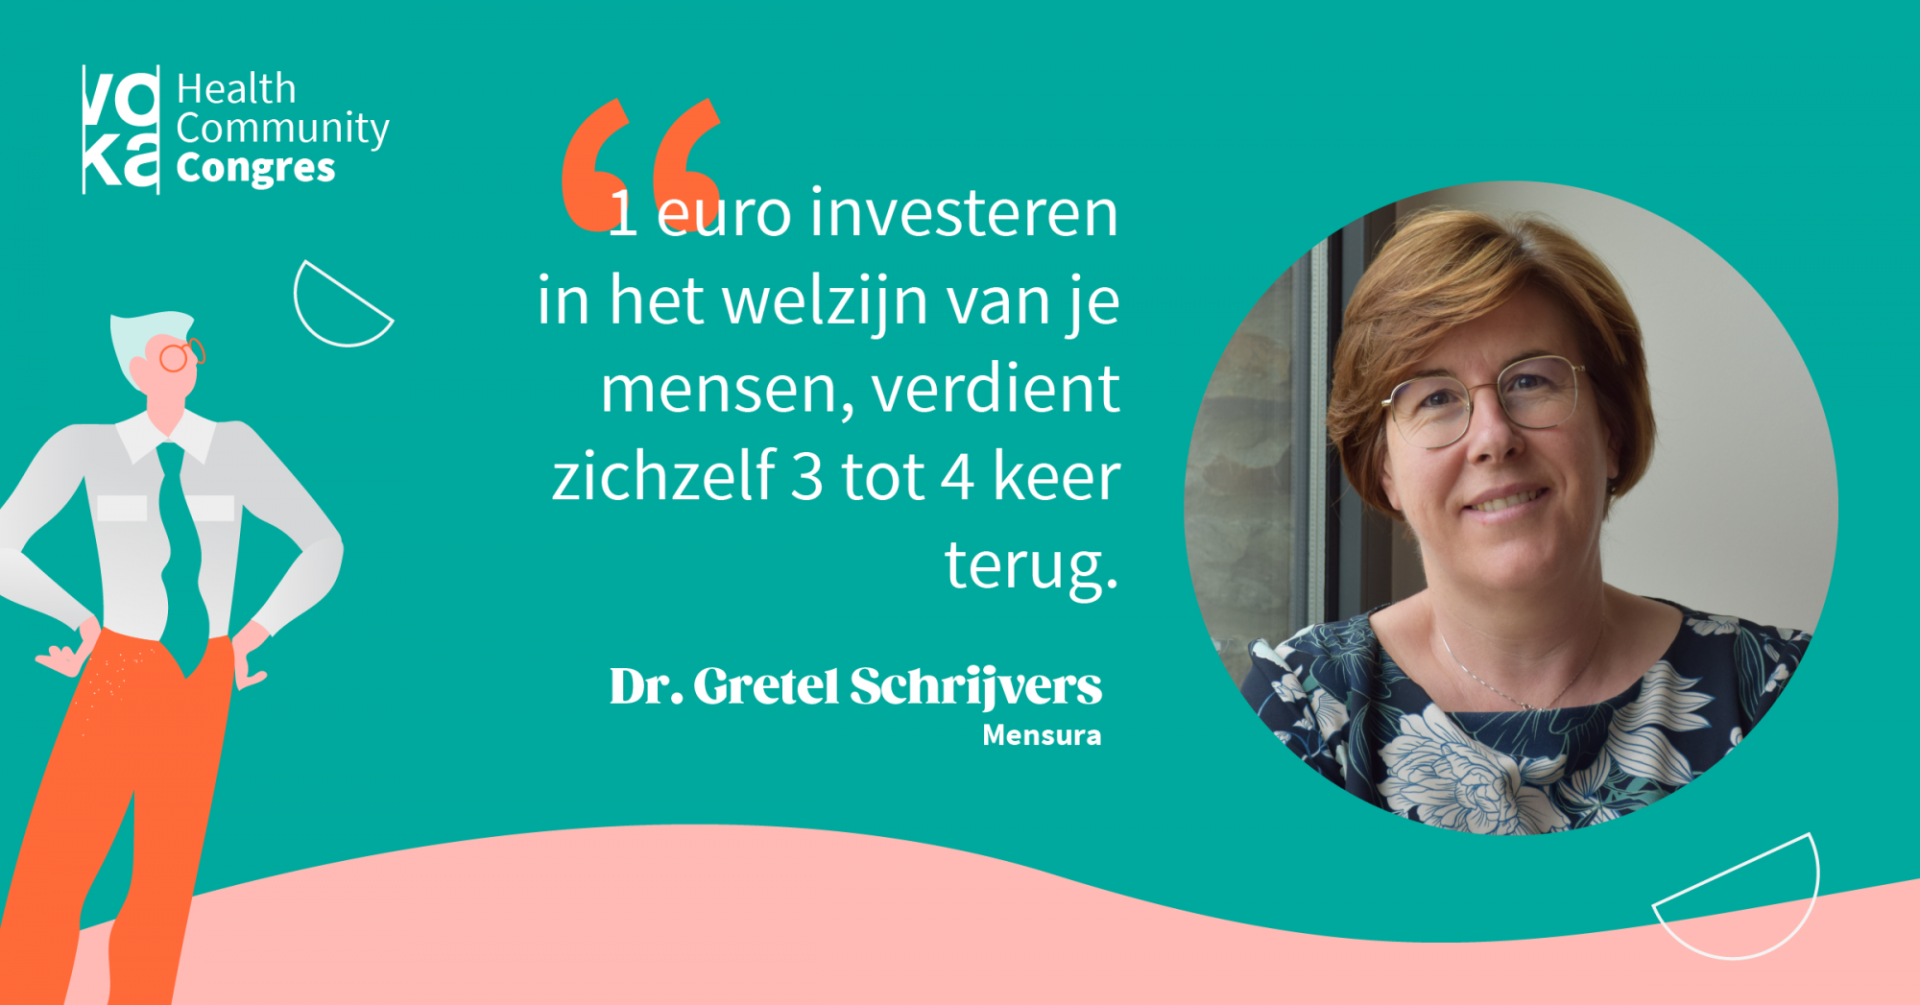 Dr. Gretel Schrijvers